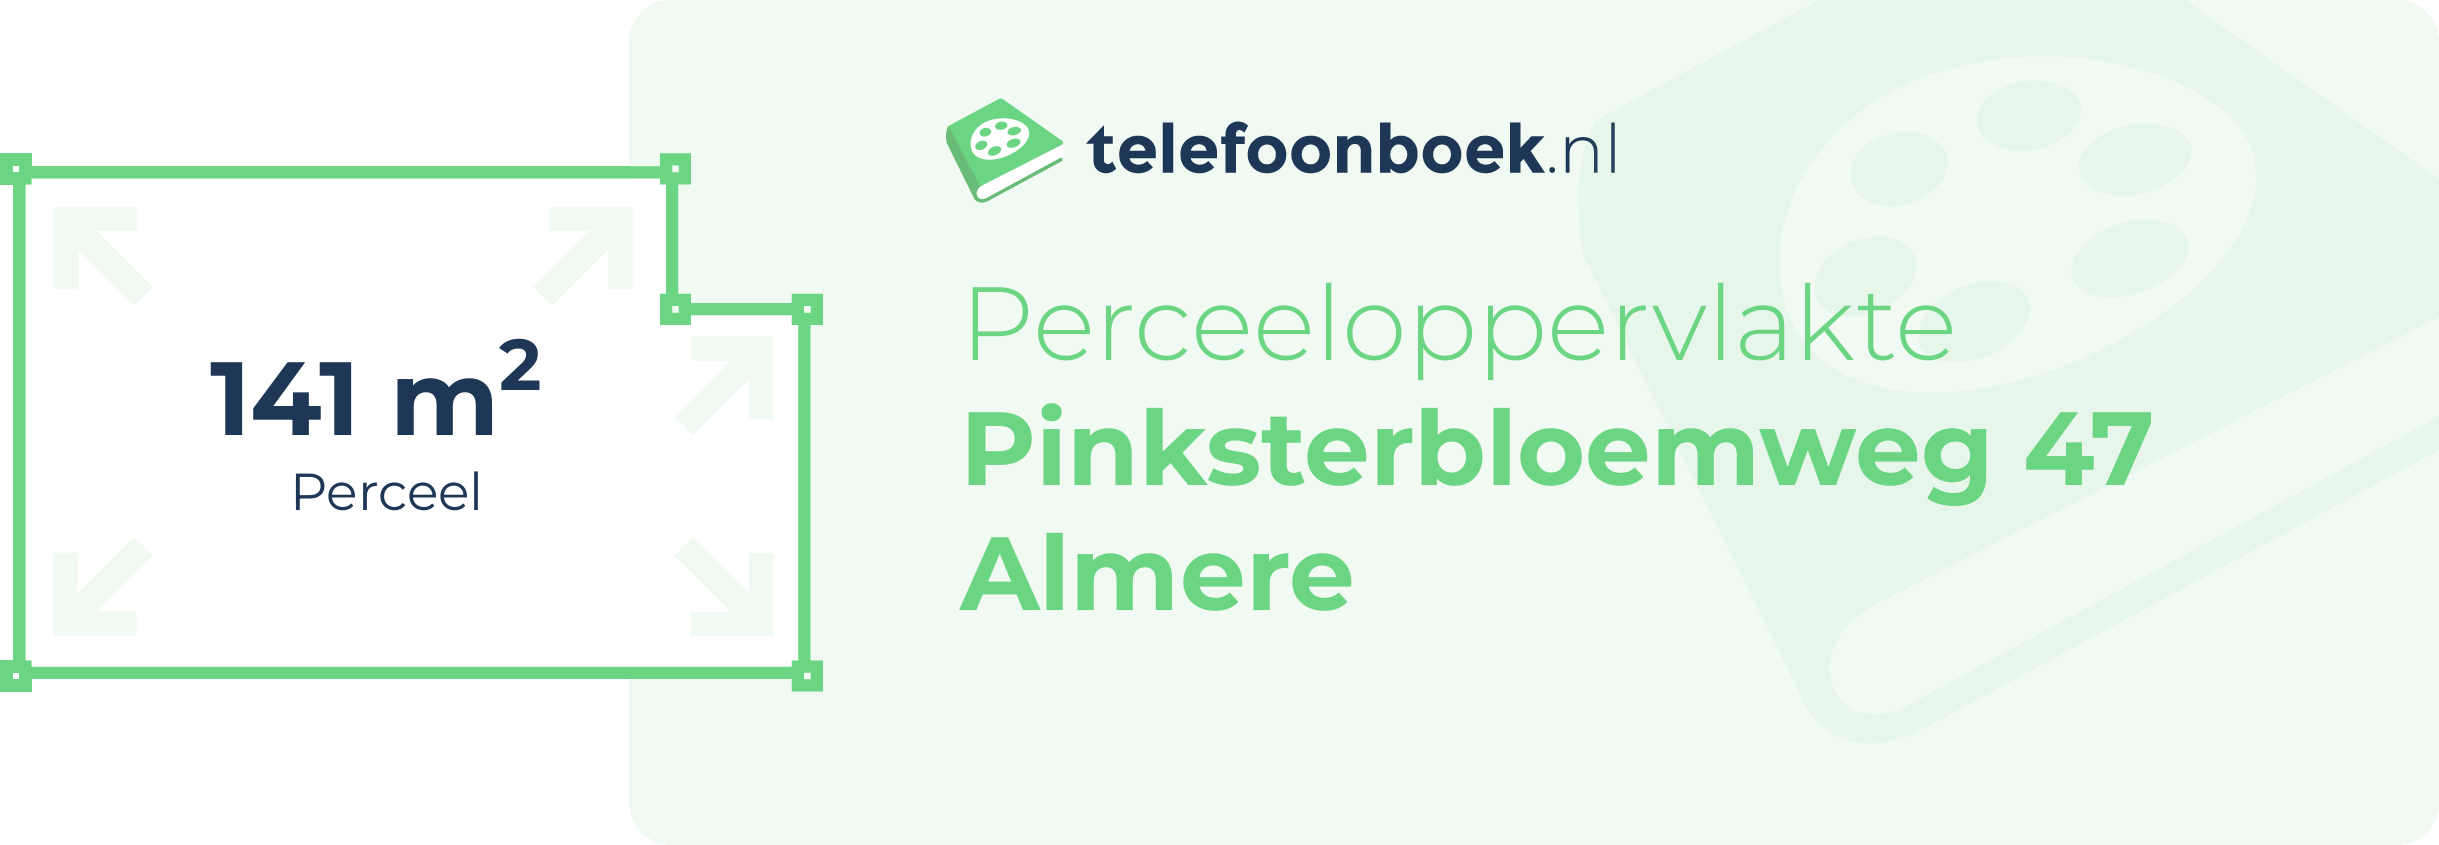 Perceeloppervlakte Pinksterbloemweg 47 Almere